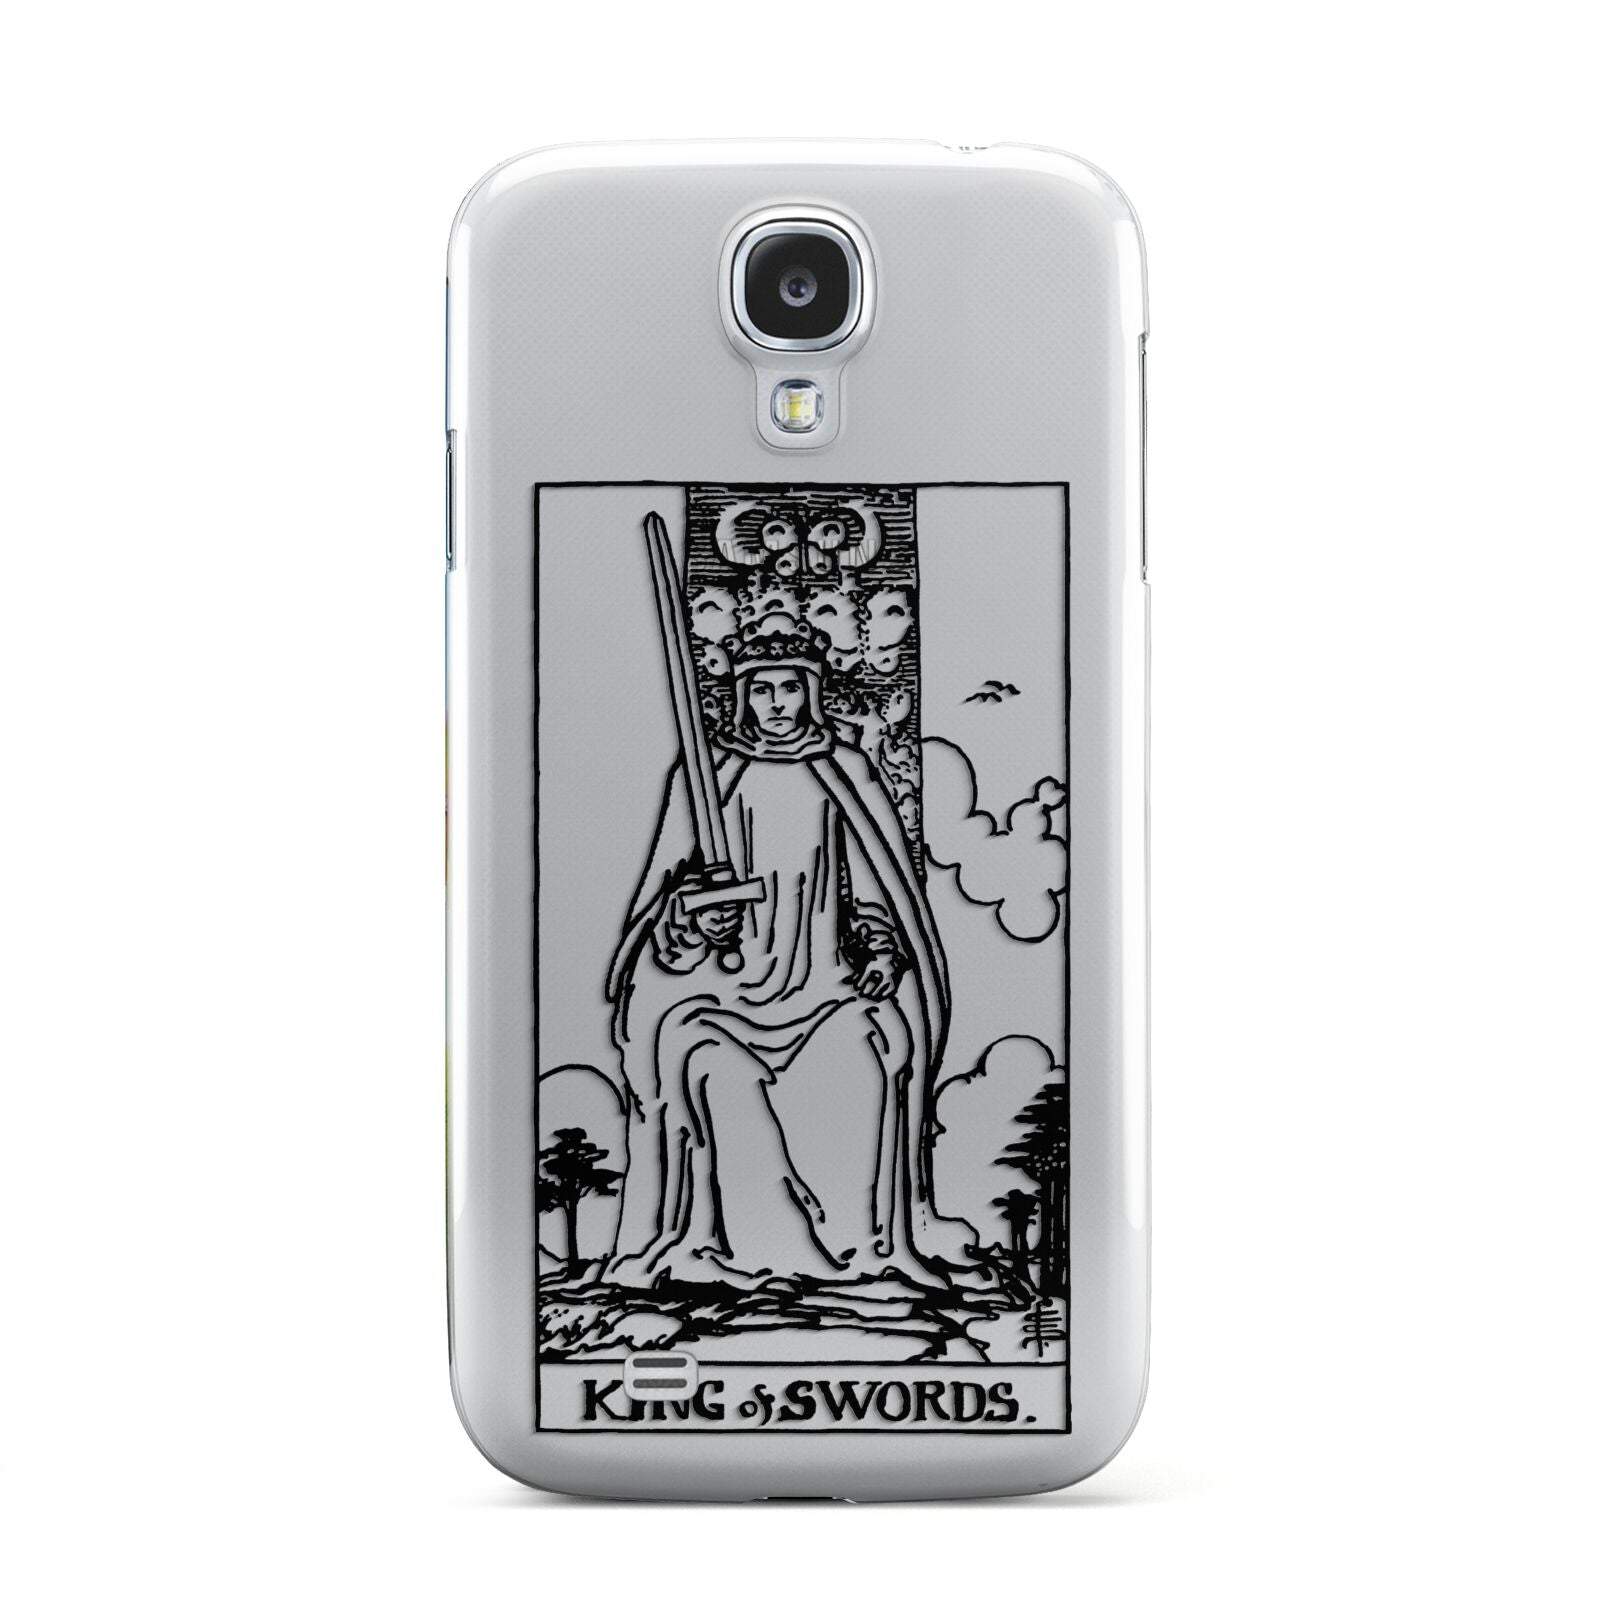 King of Swords Monochrome Samsung Galaxy S4 Case